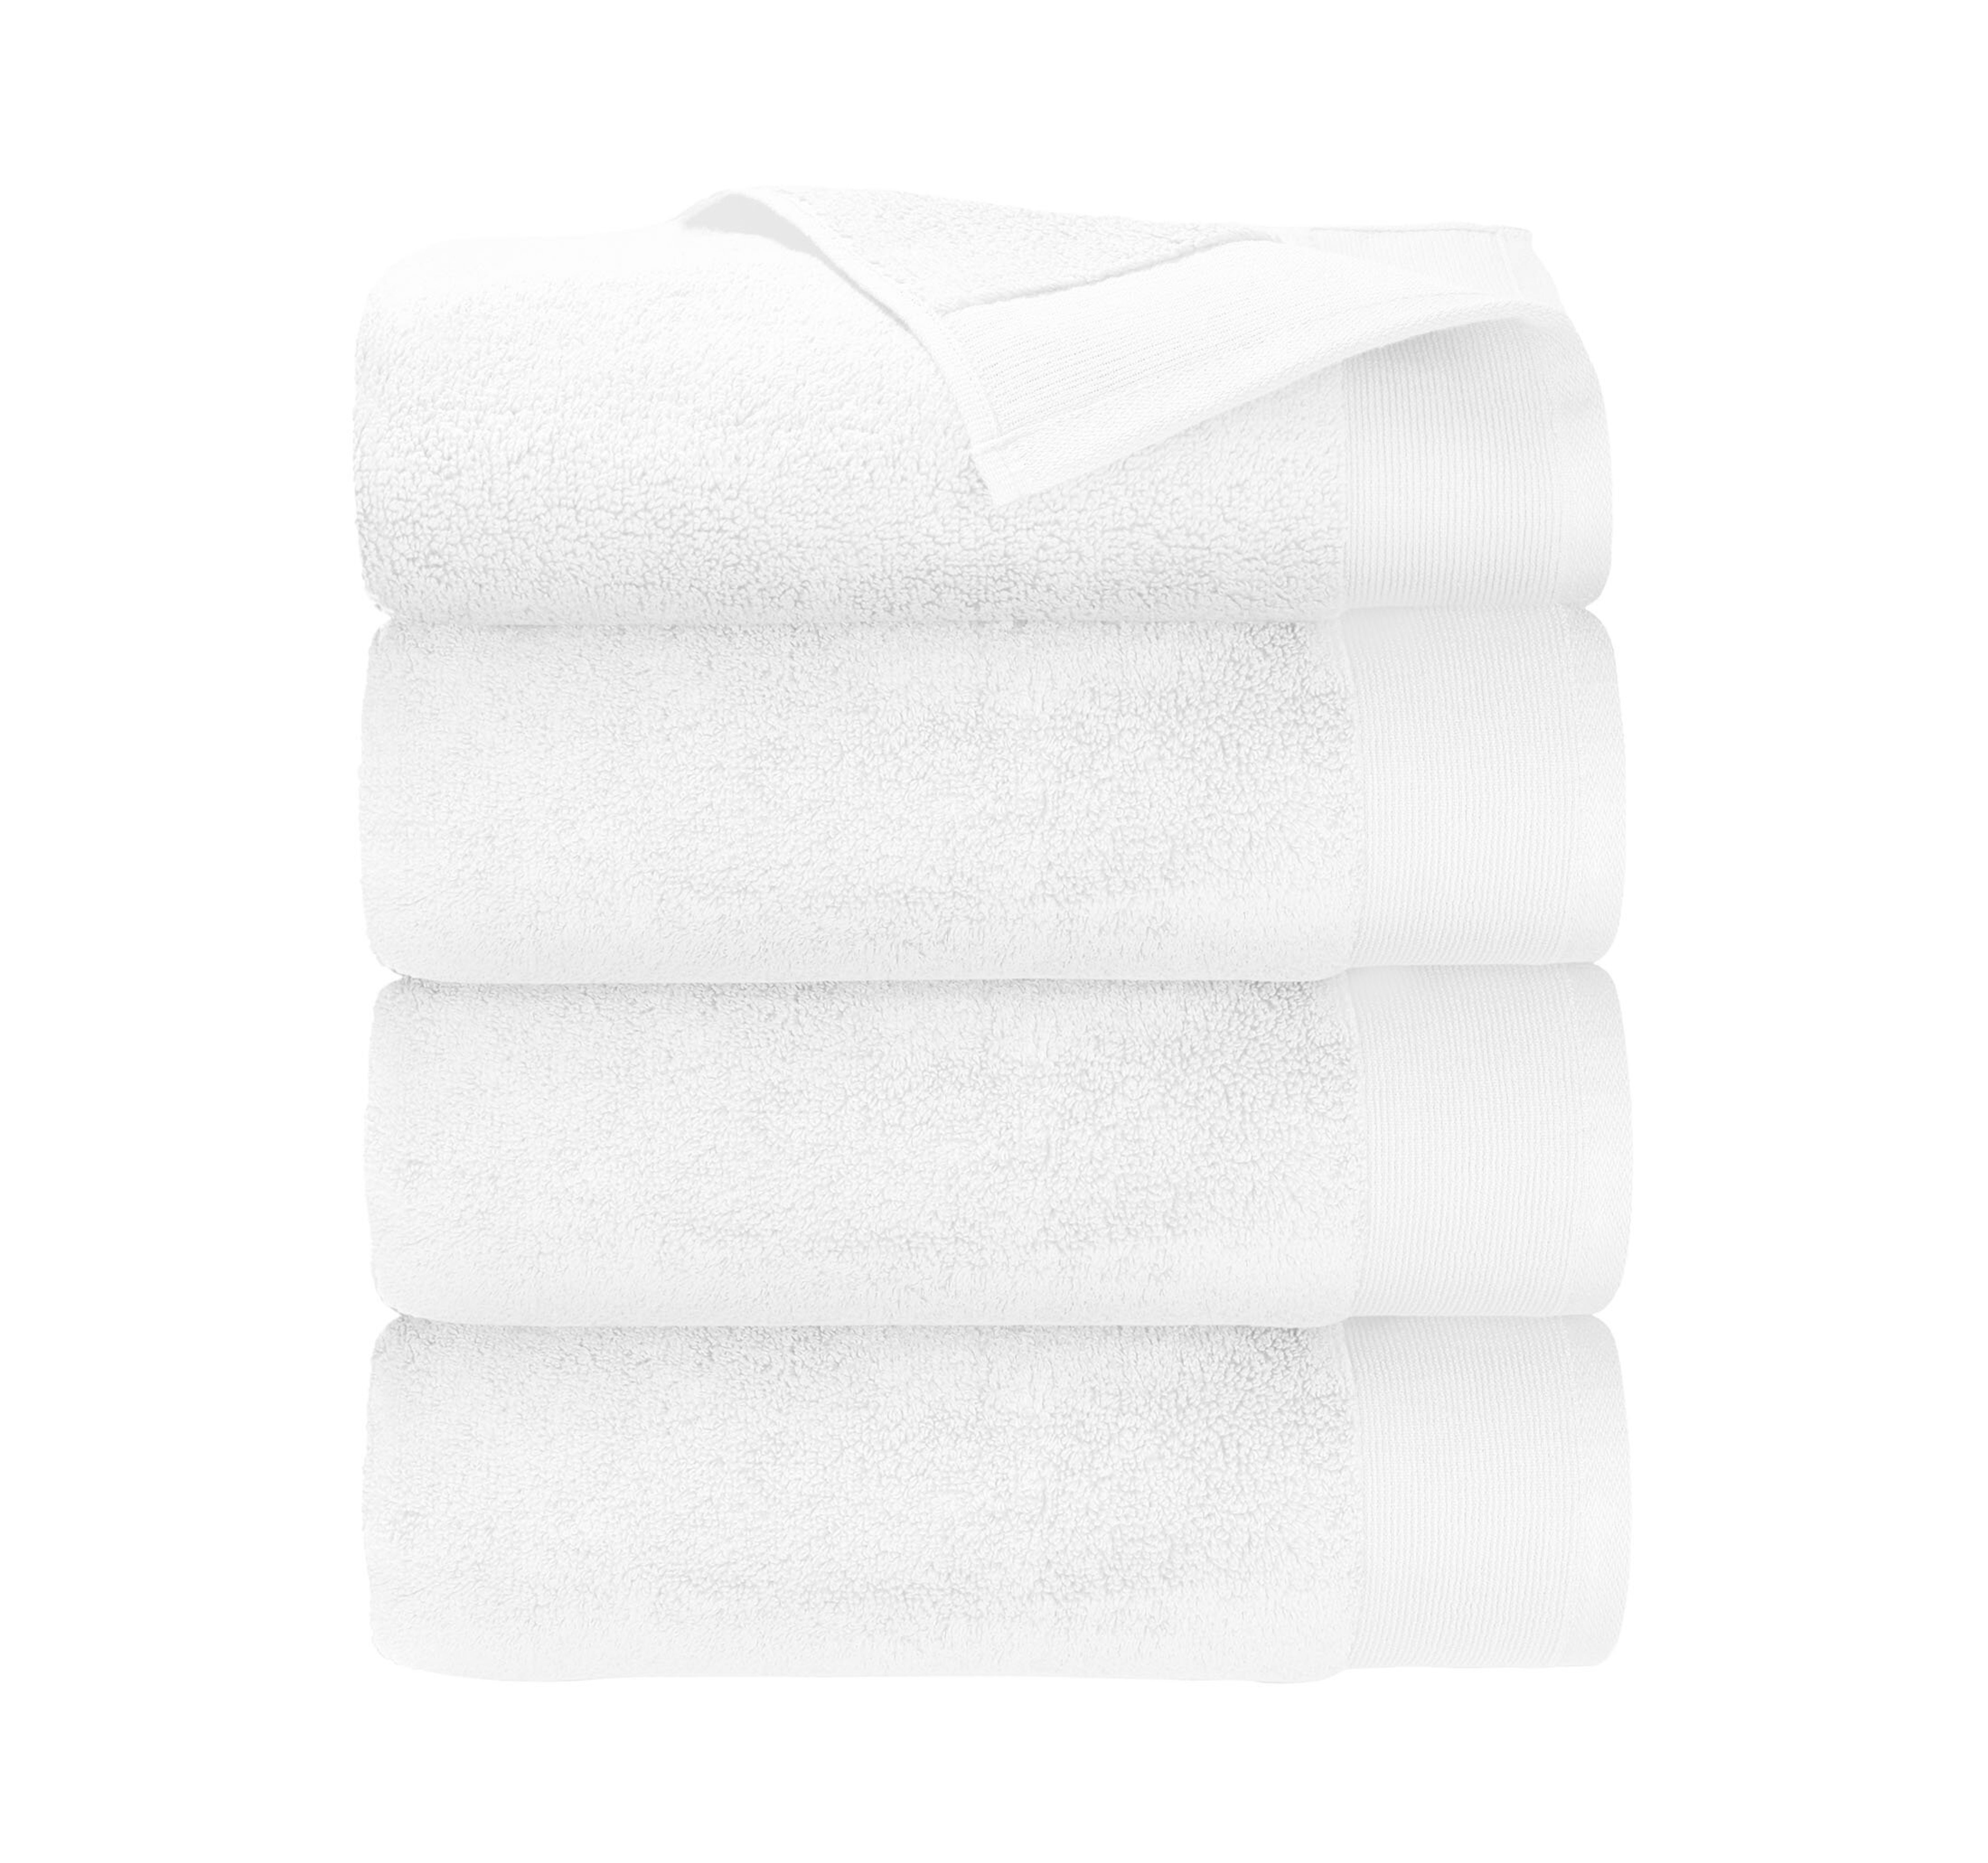 Ruvanti Bath Towels 4 Pcs (27x54 inch, Cream) 100% Cotton Extra